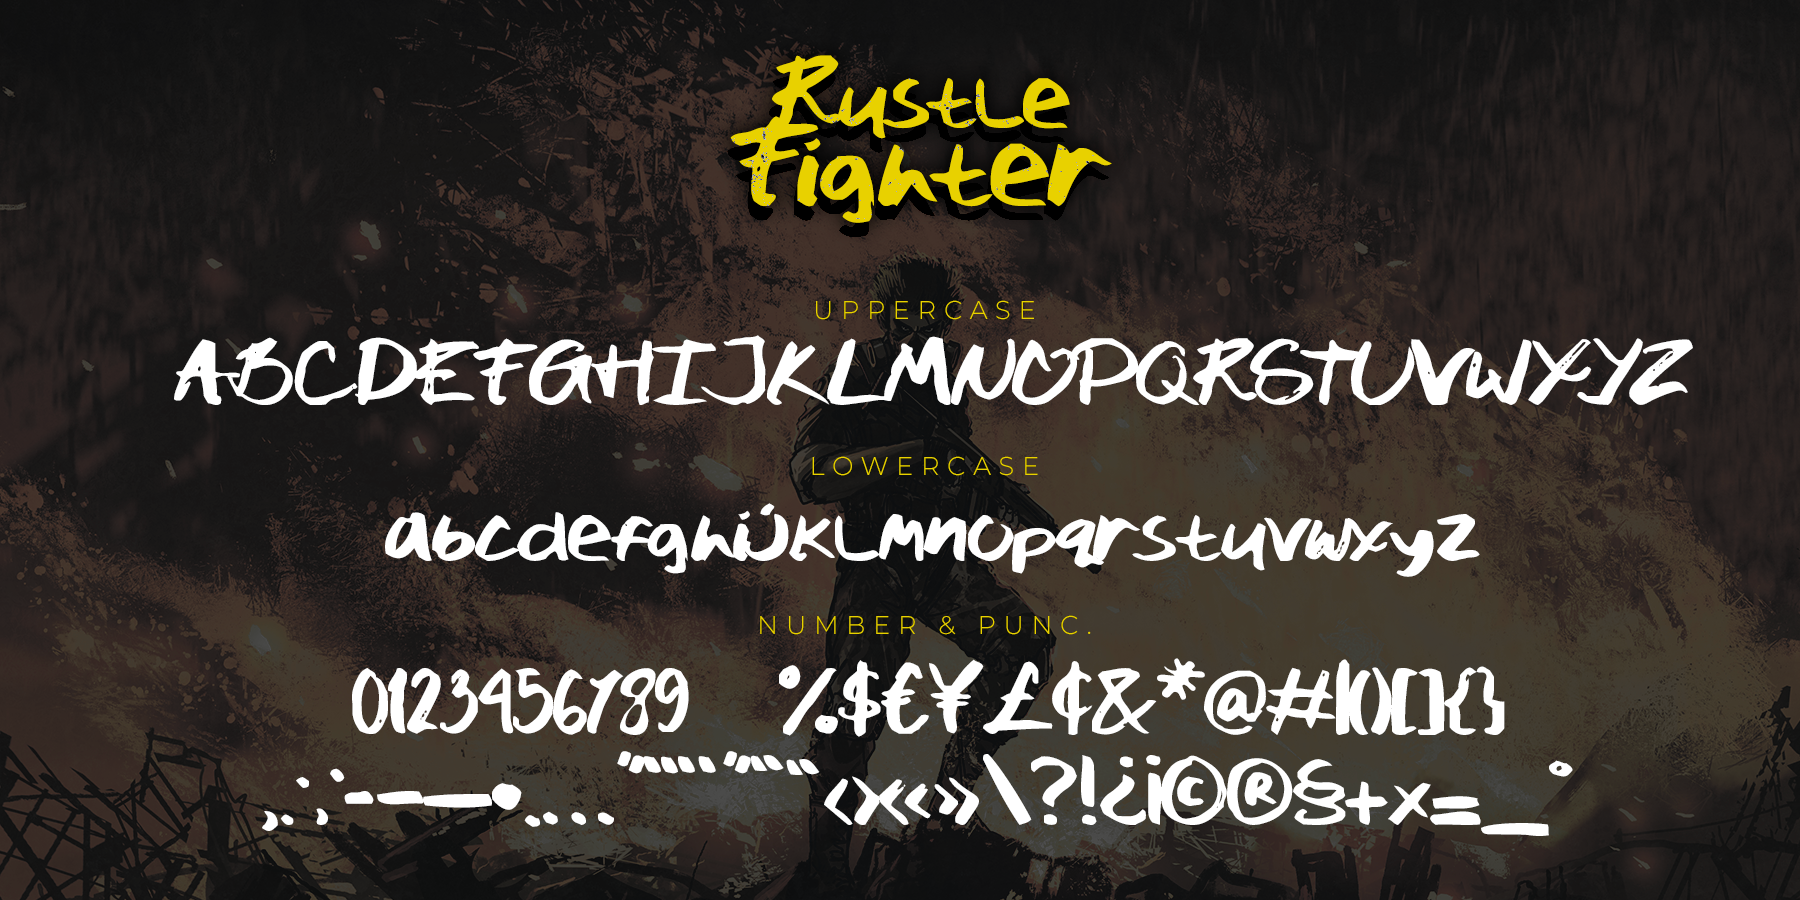 Rustle Fighter